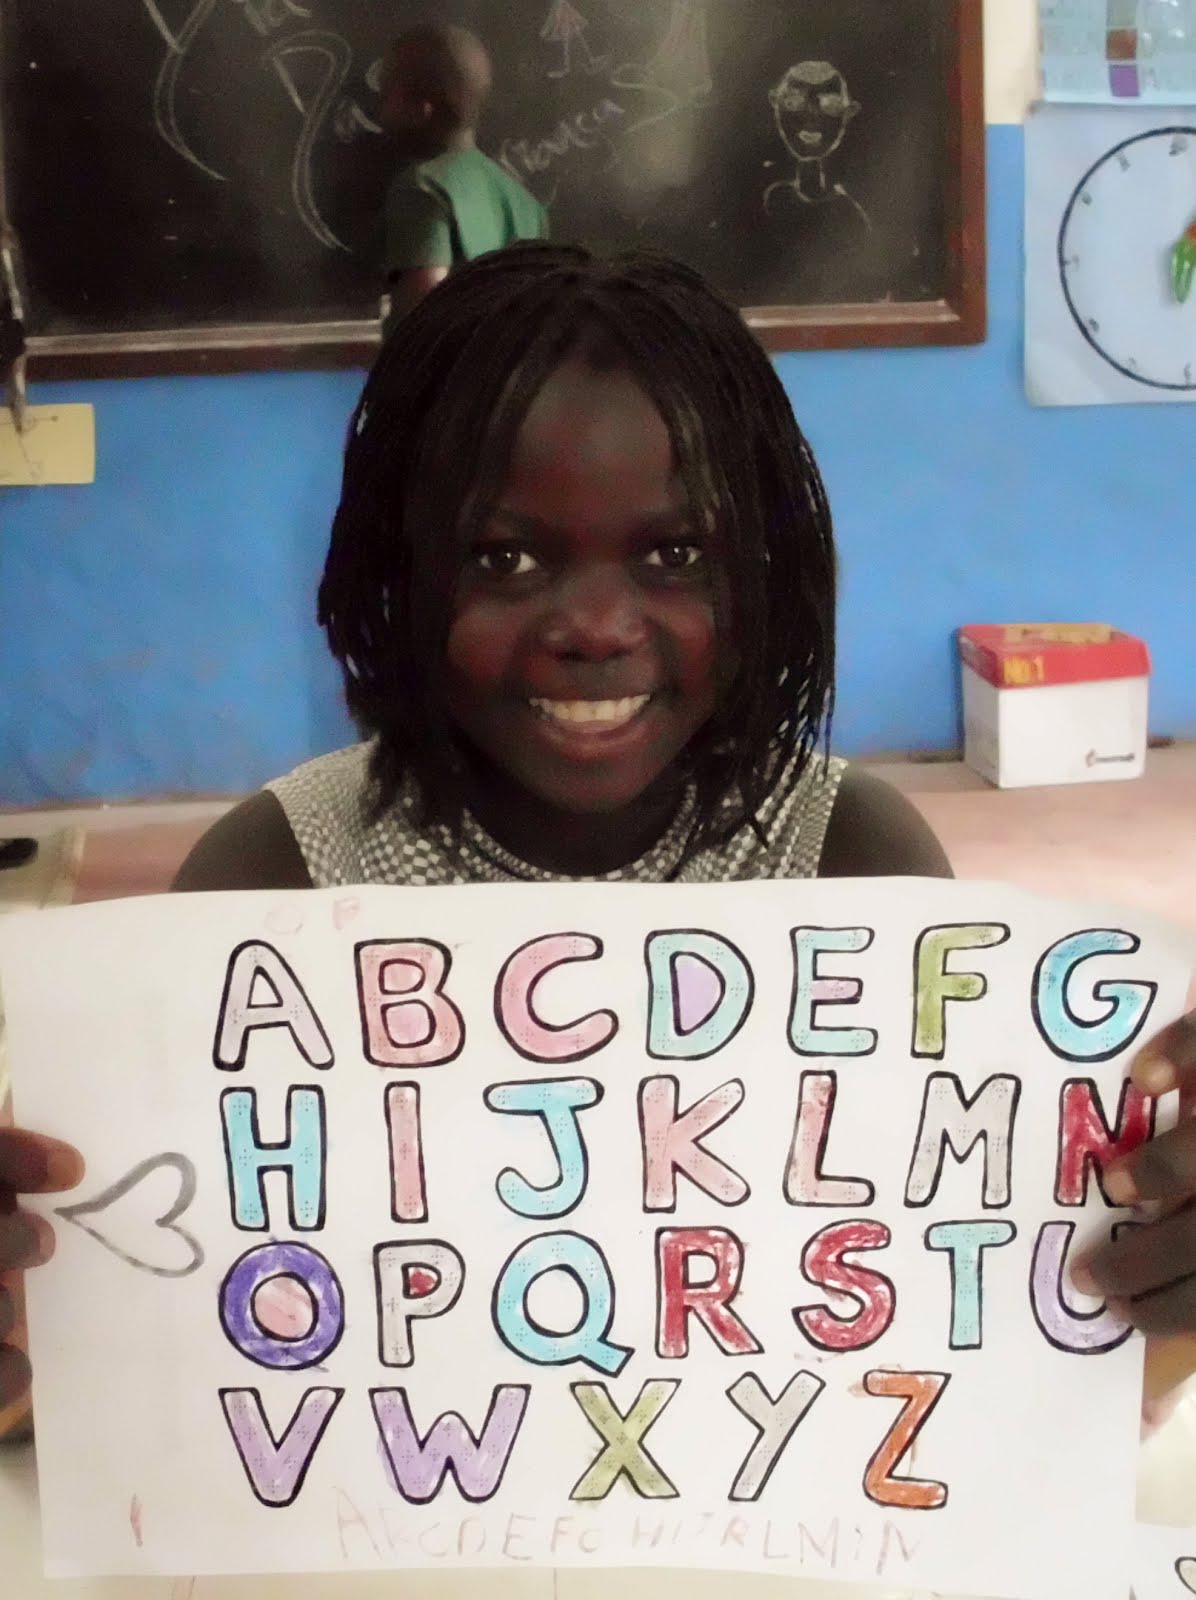 Fun with the alphabet